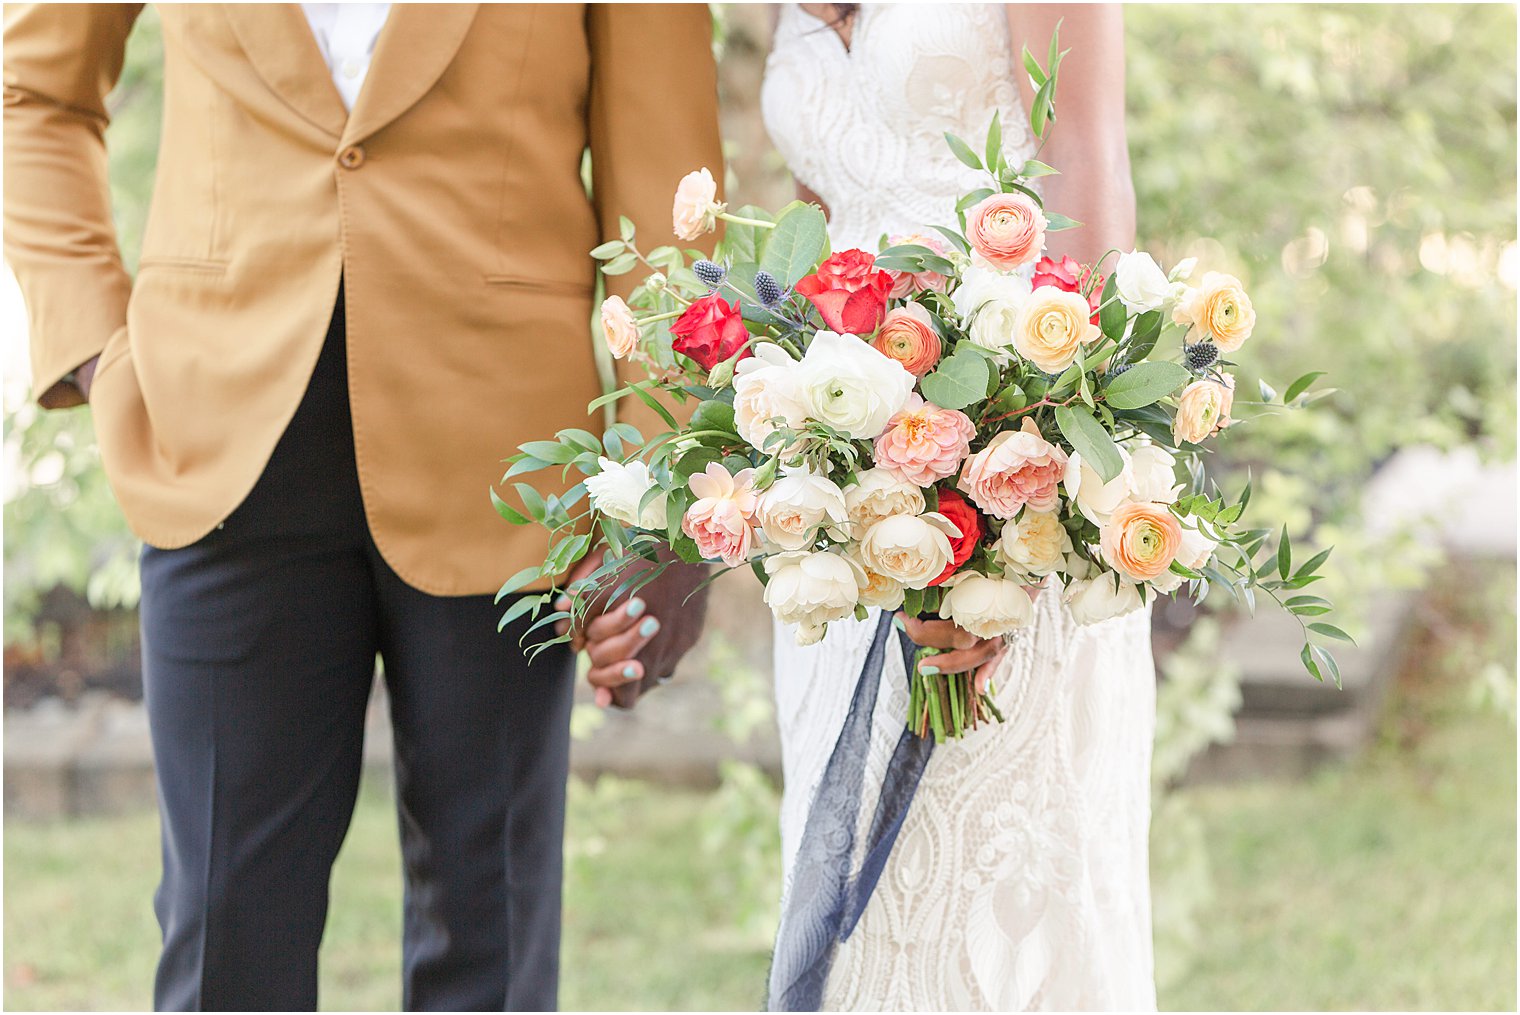 Bride holding floral arrangement at wedding editorial shoot